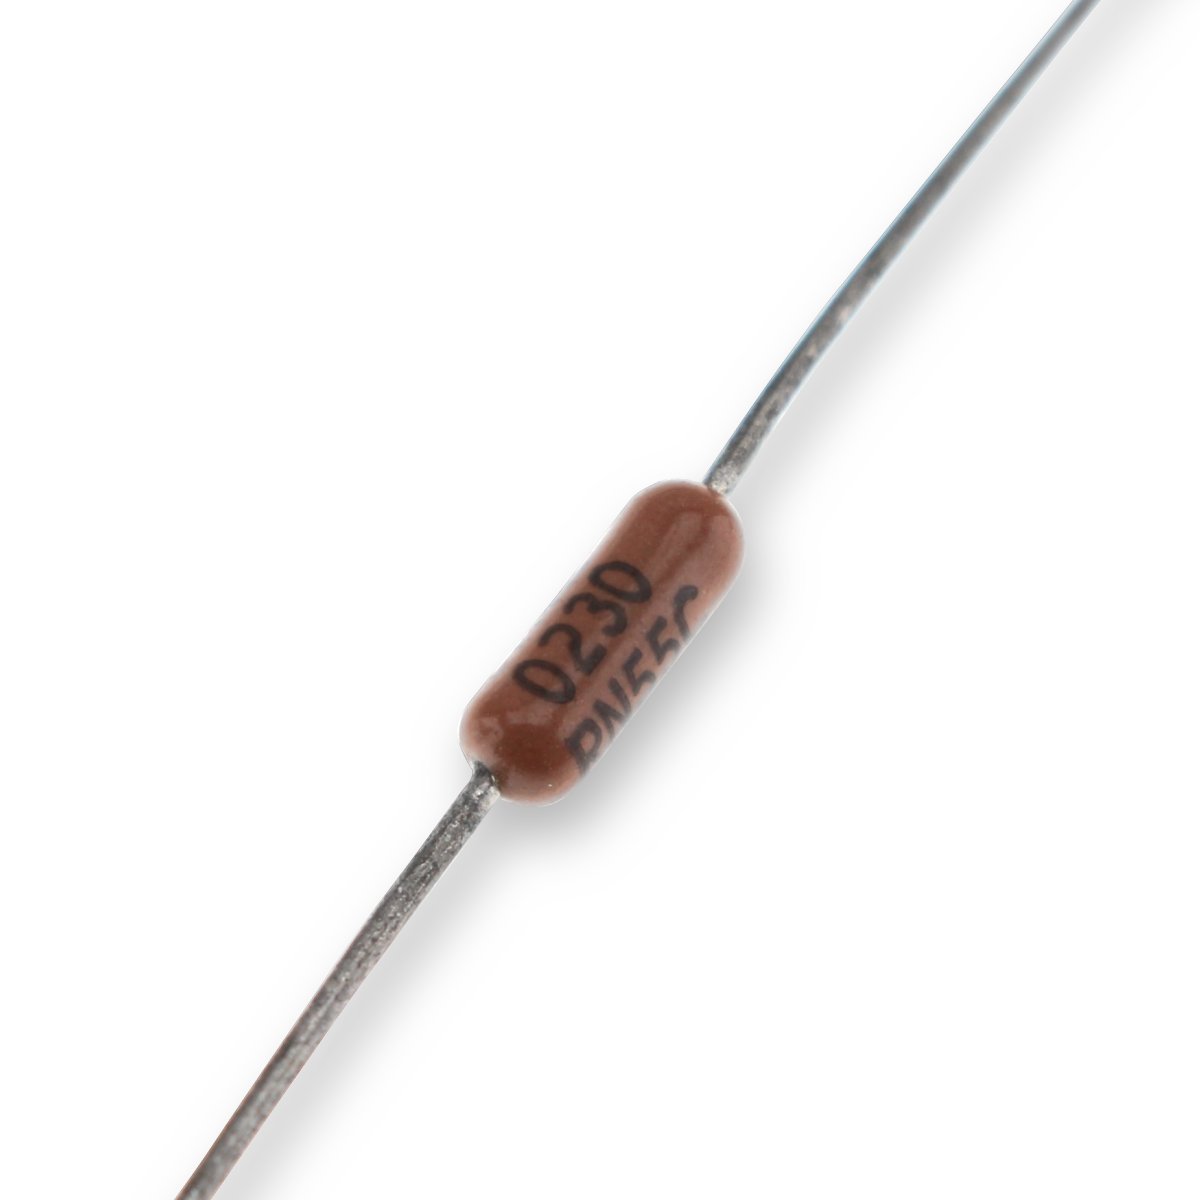 VISHAY DALE CMF55 Resistor 1% 50ppm 301 KOhm